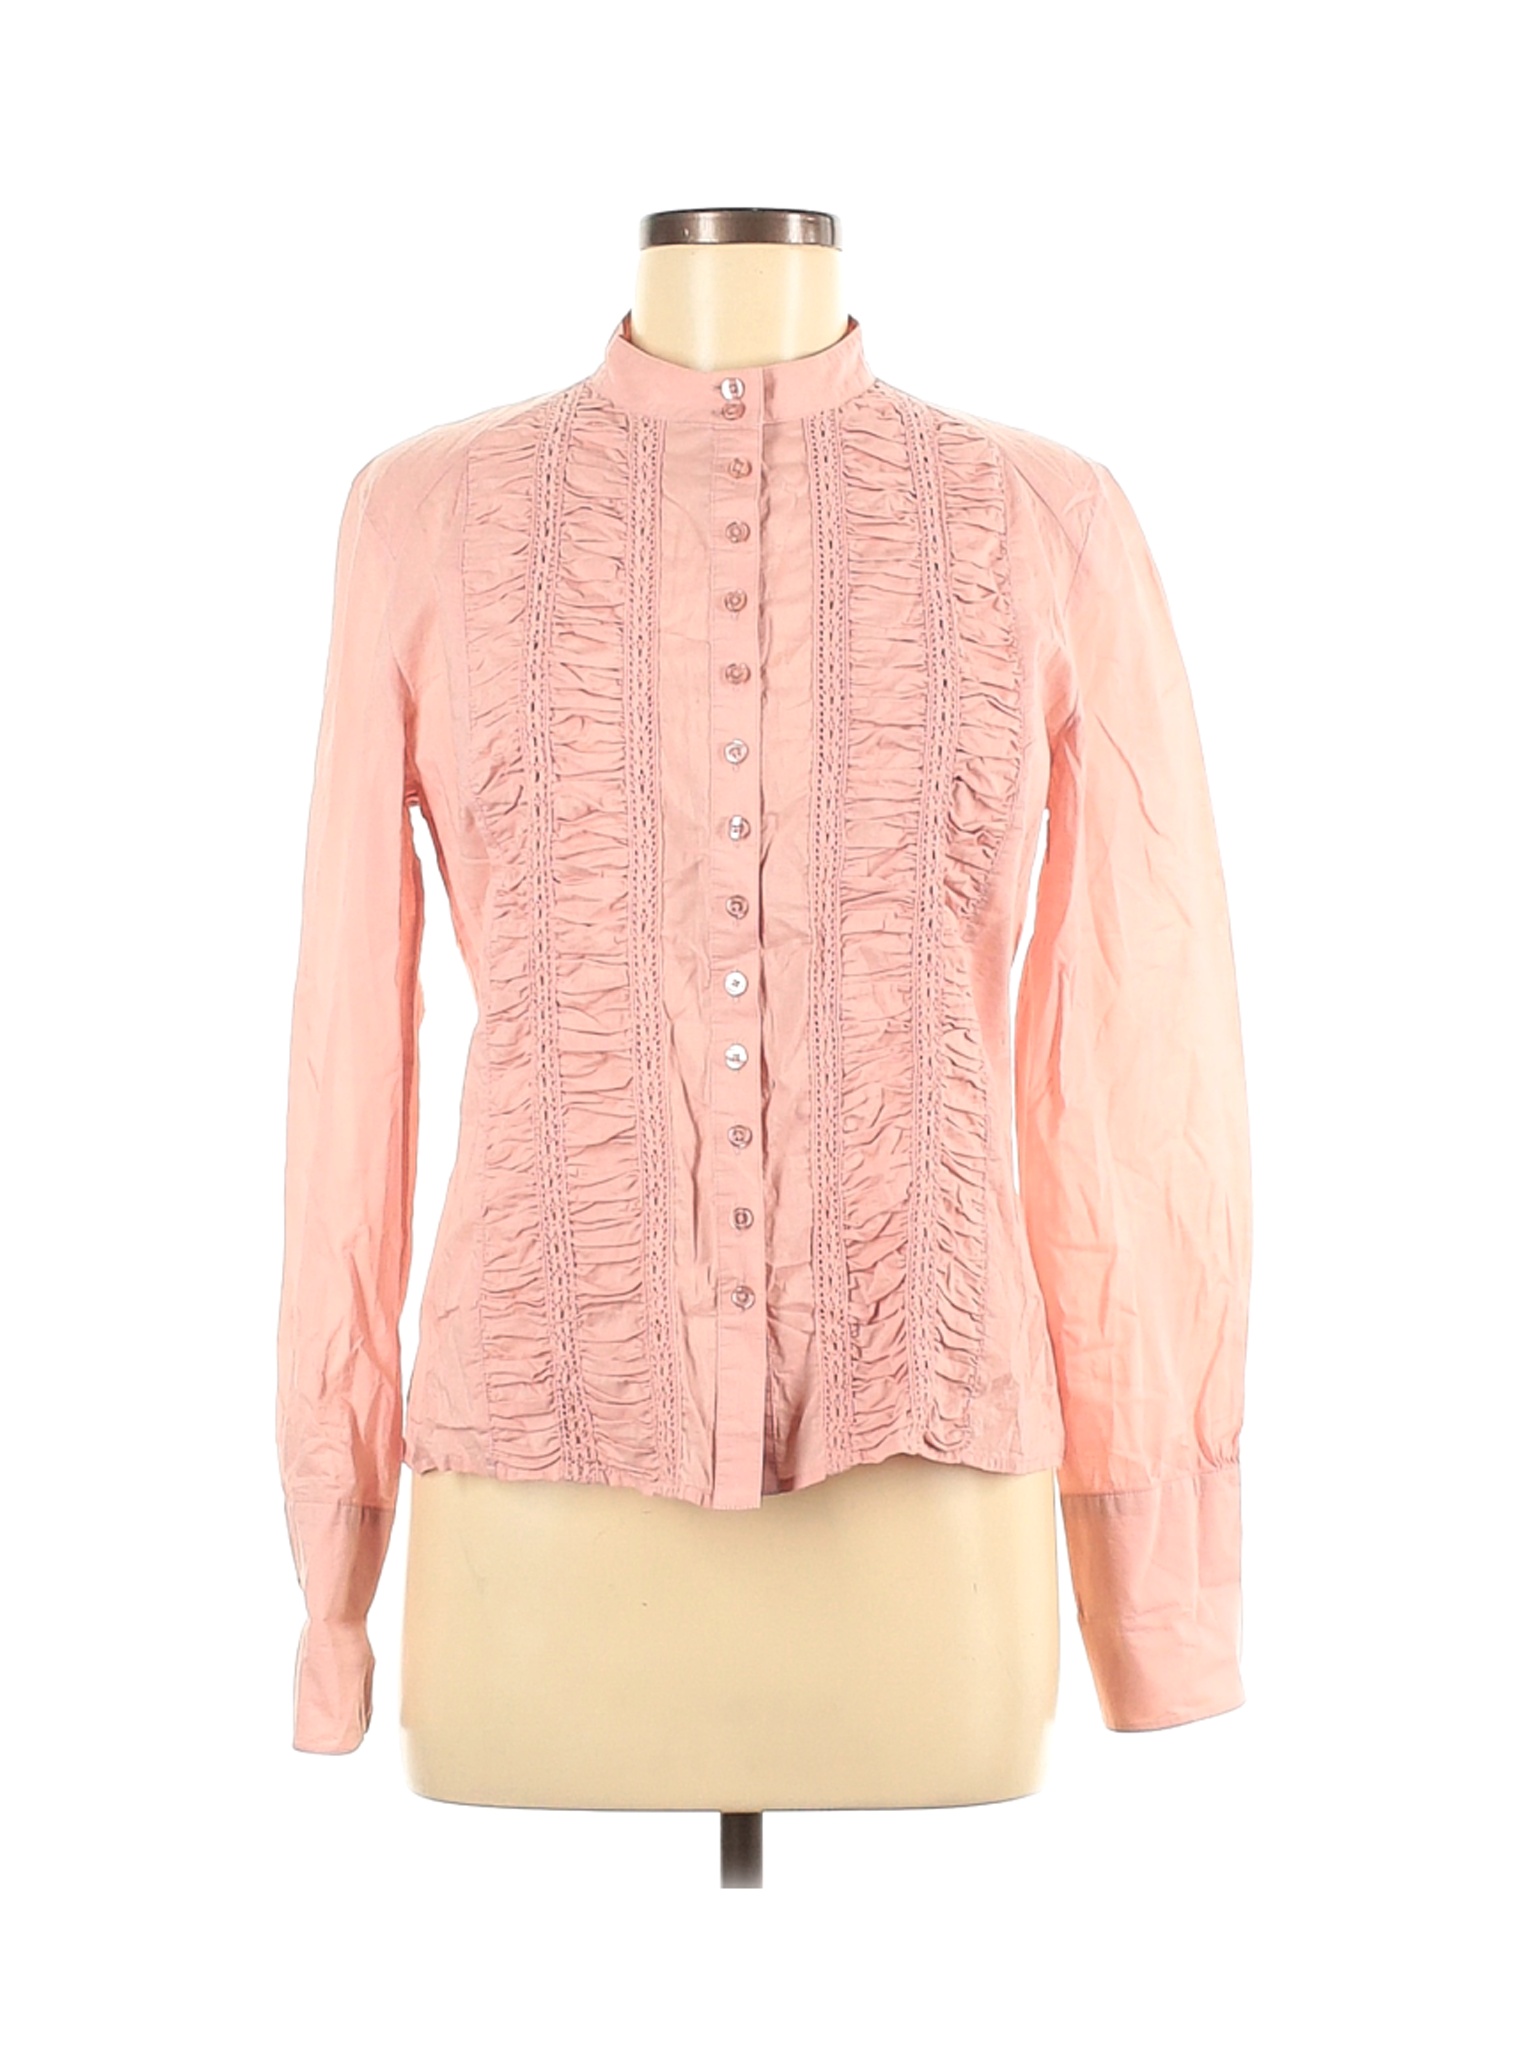 Neiman Marcus Women Pink Long Sleeve Button-Down Shirt M | eBay